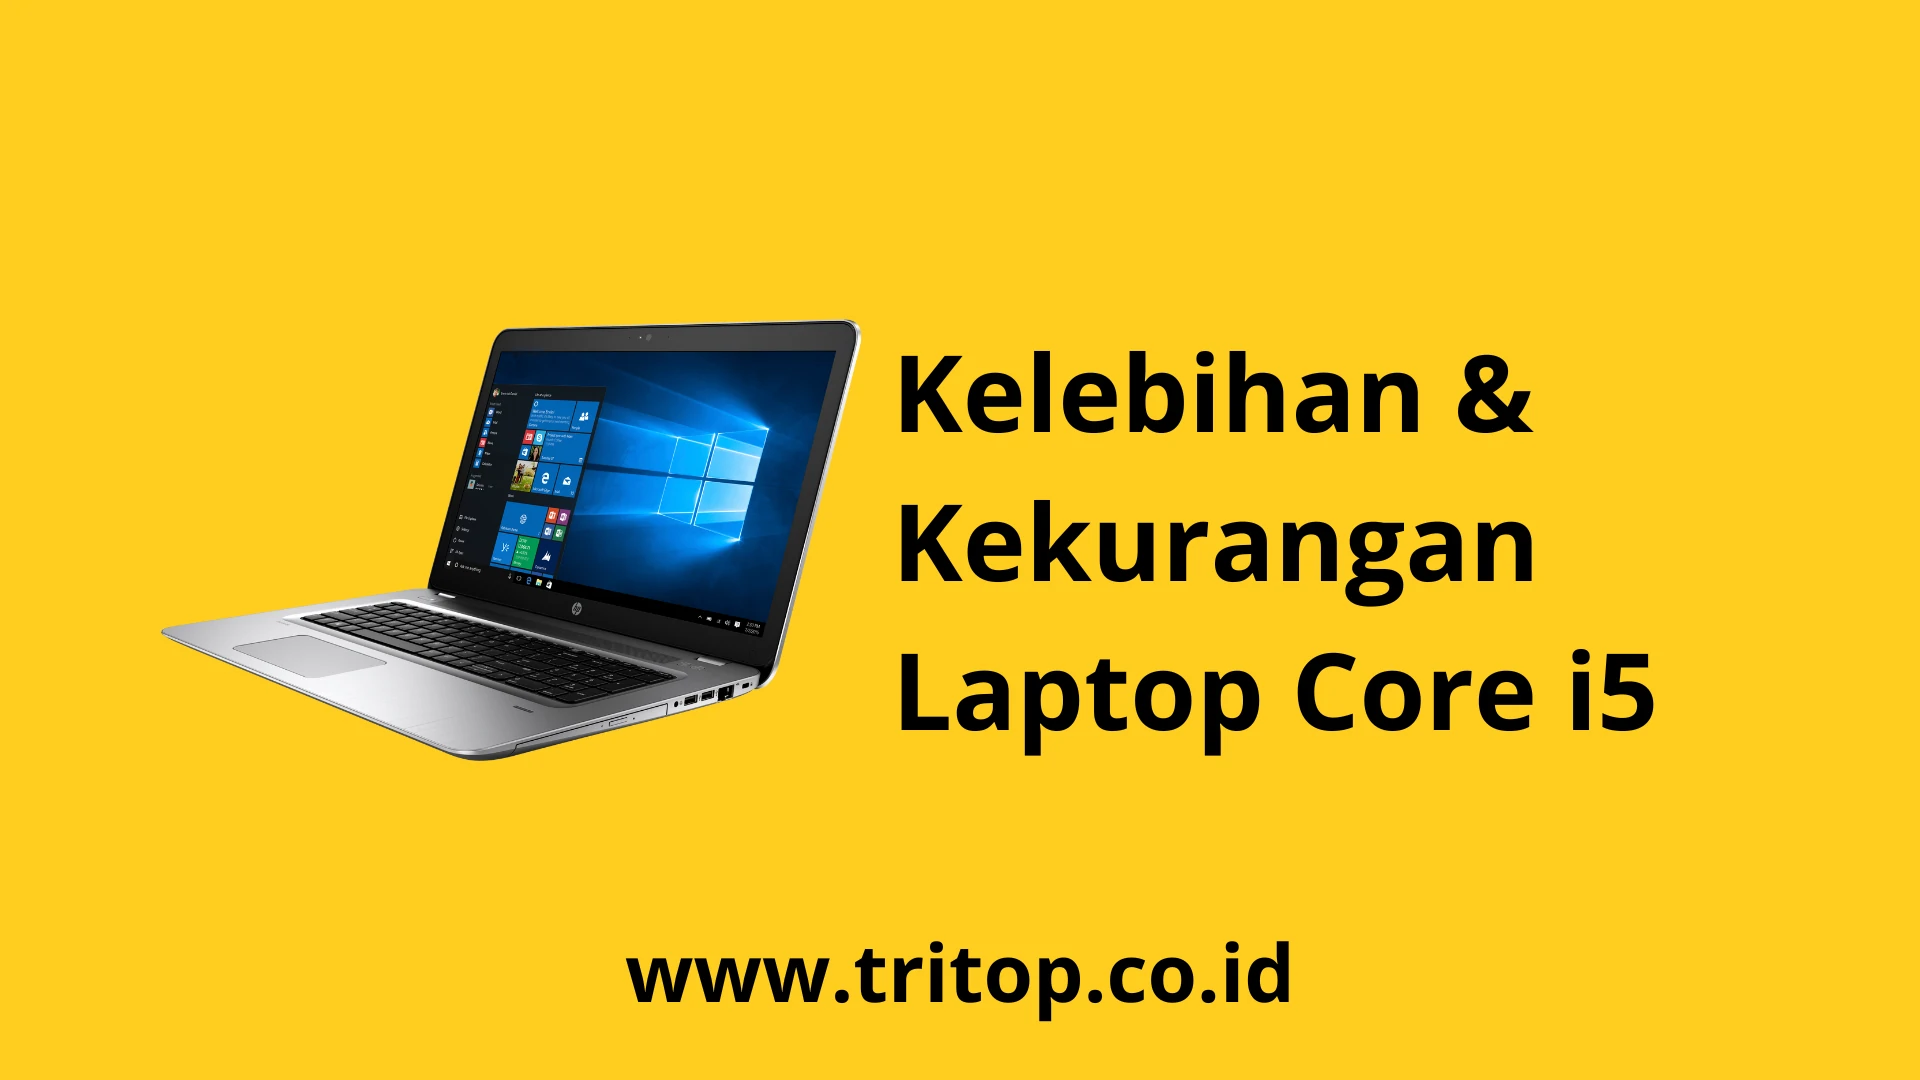 Laptop Bekas Core i5 Tritop.co.id